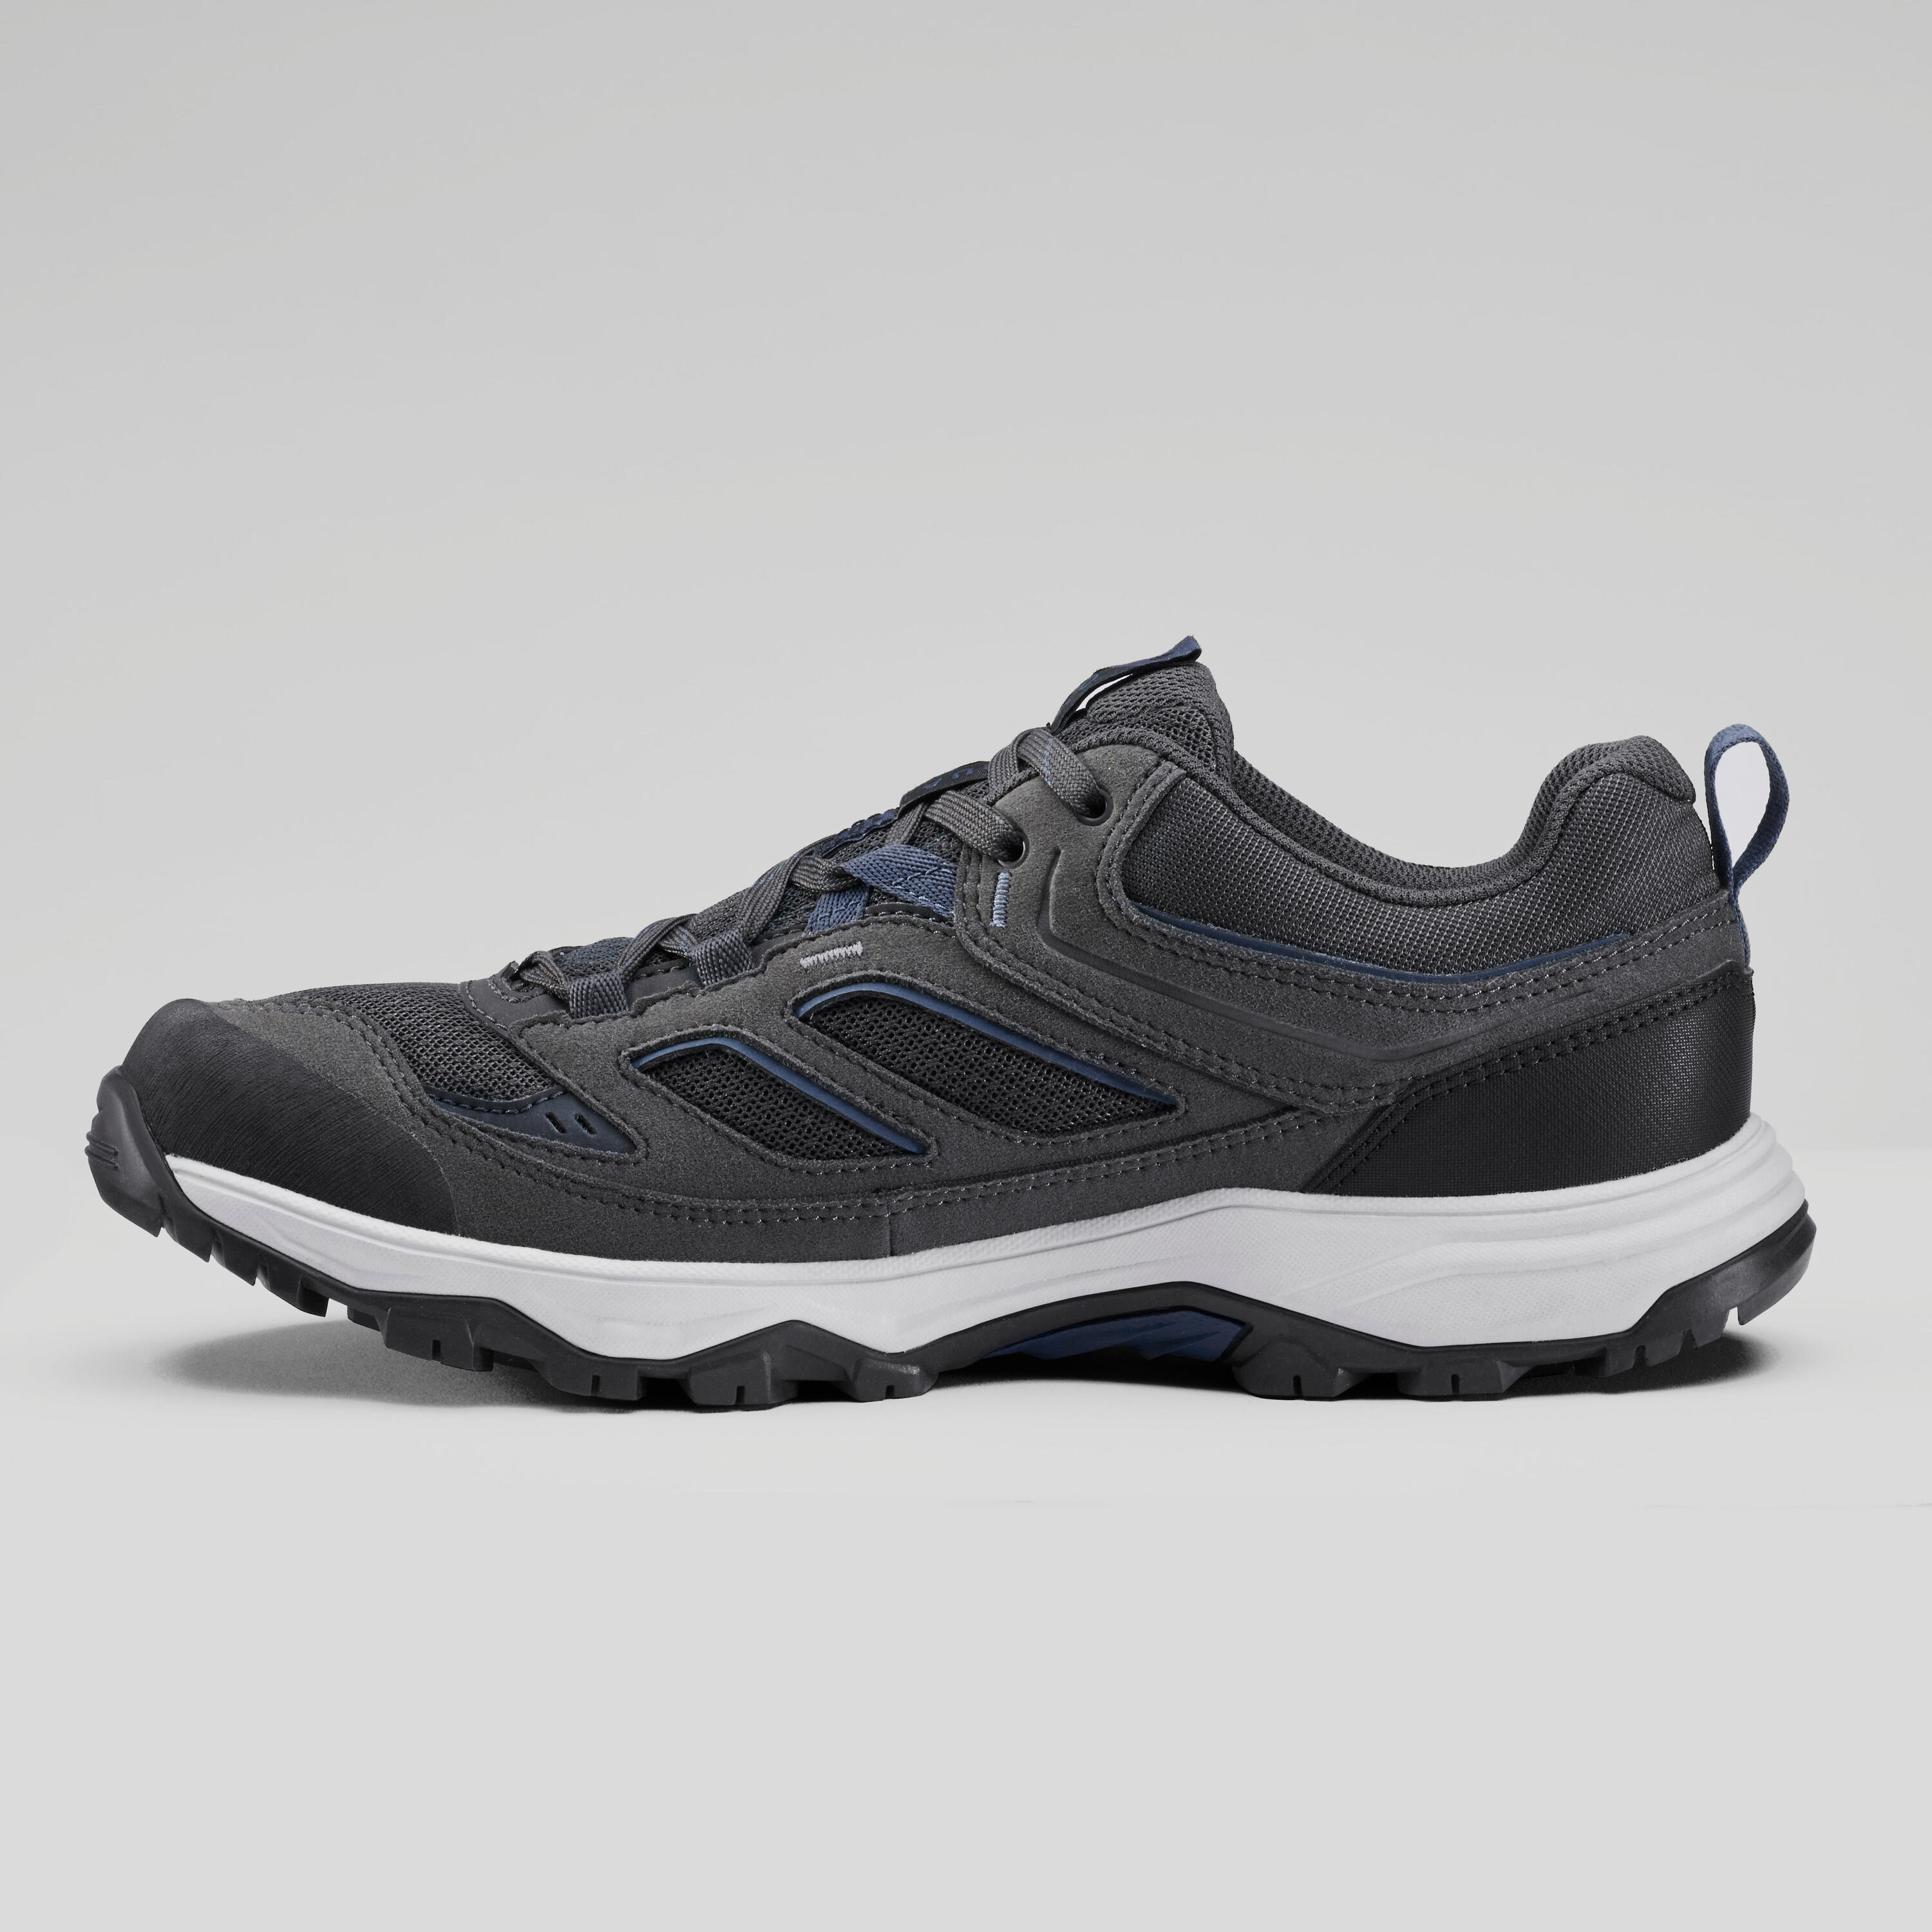 Men's mountain hiking shoes - MH100 - Grey 4/8